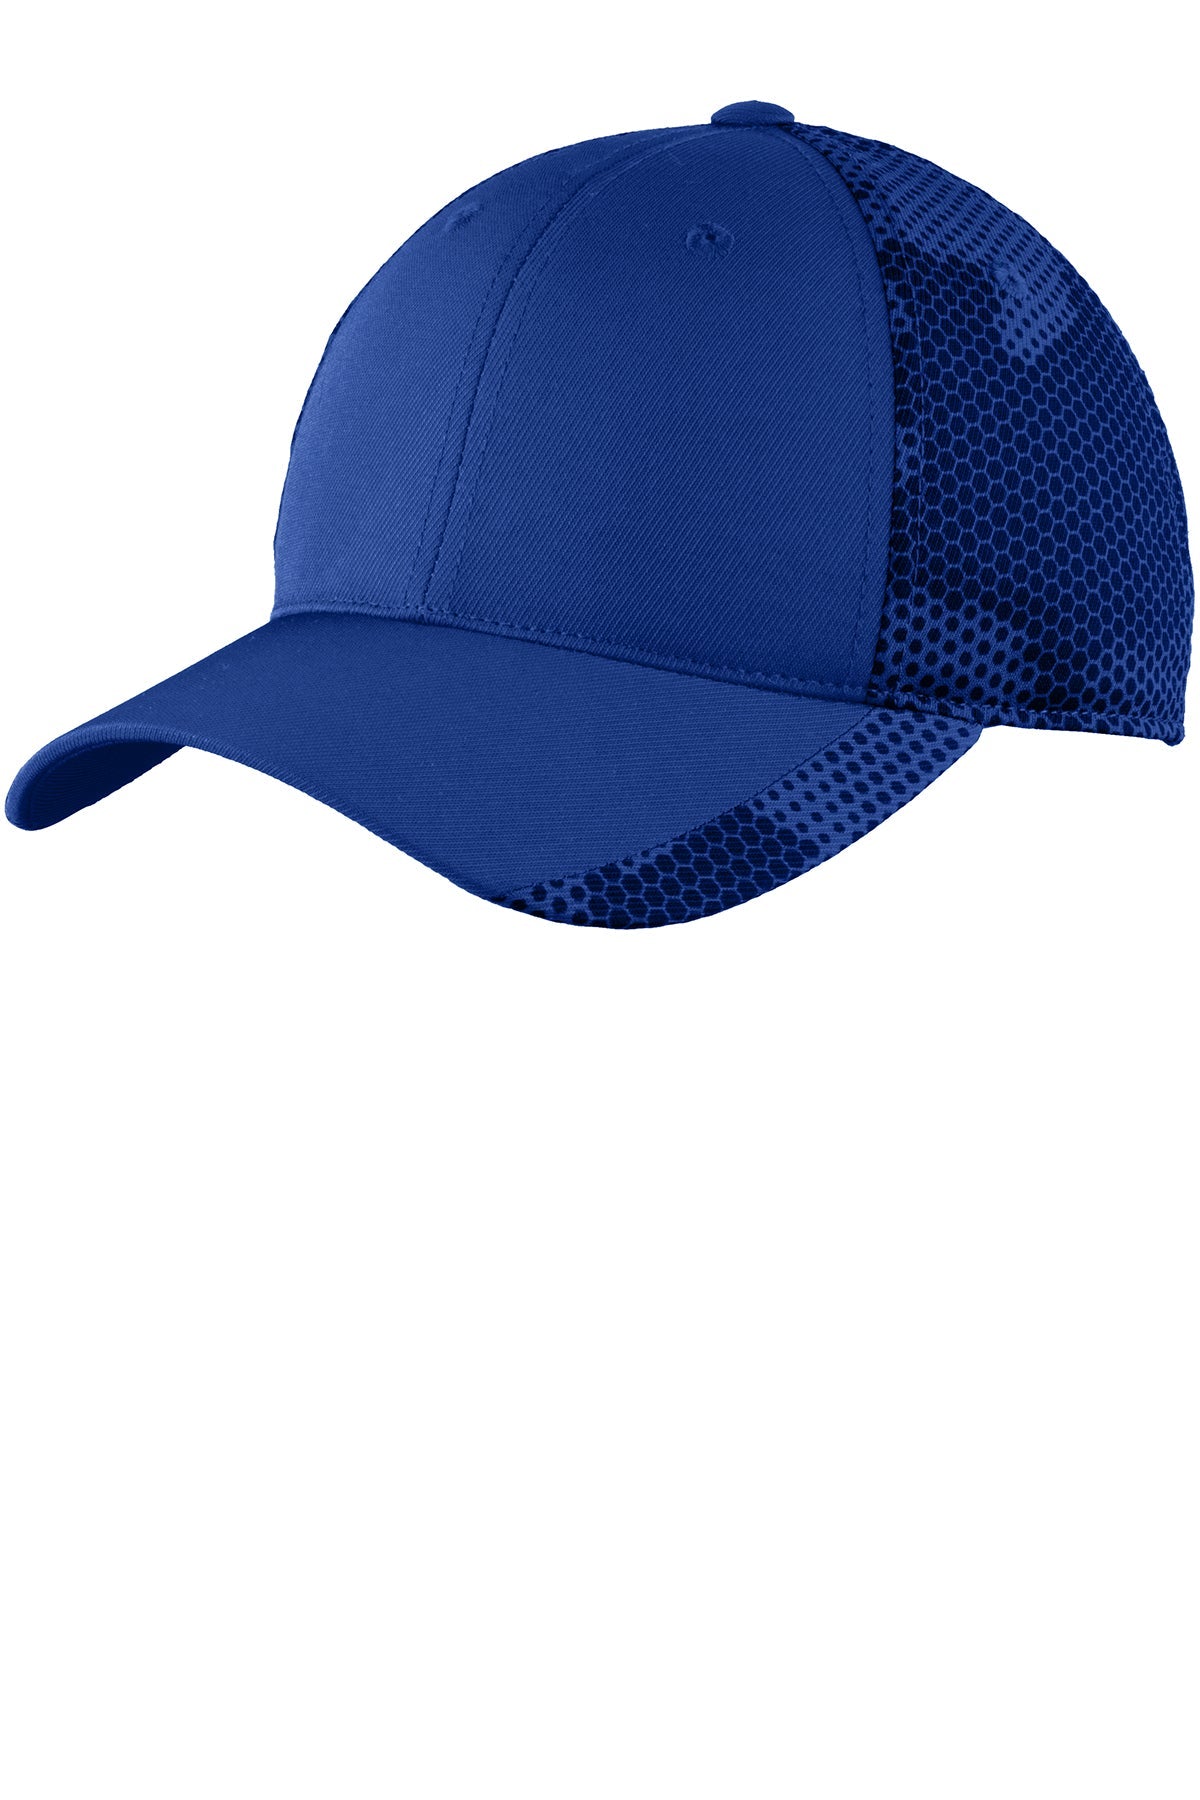 Sport-Tek Branded CamoHex Caps, True Royal